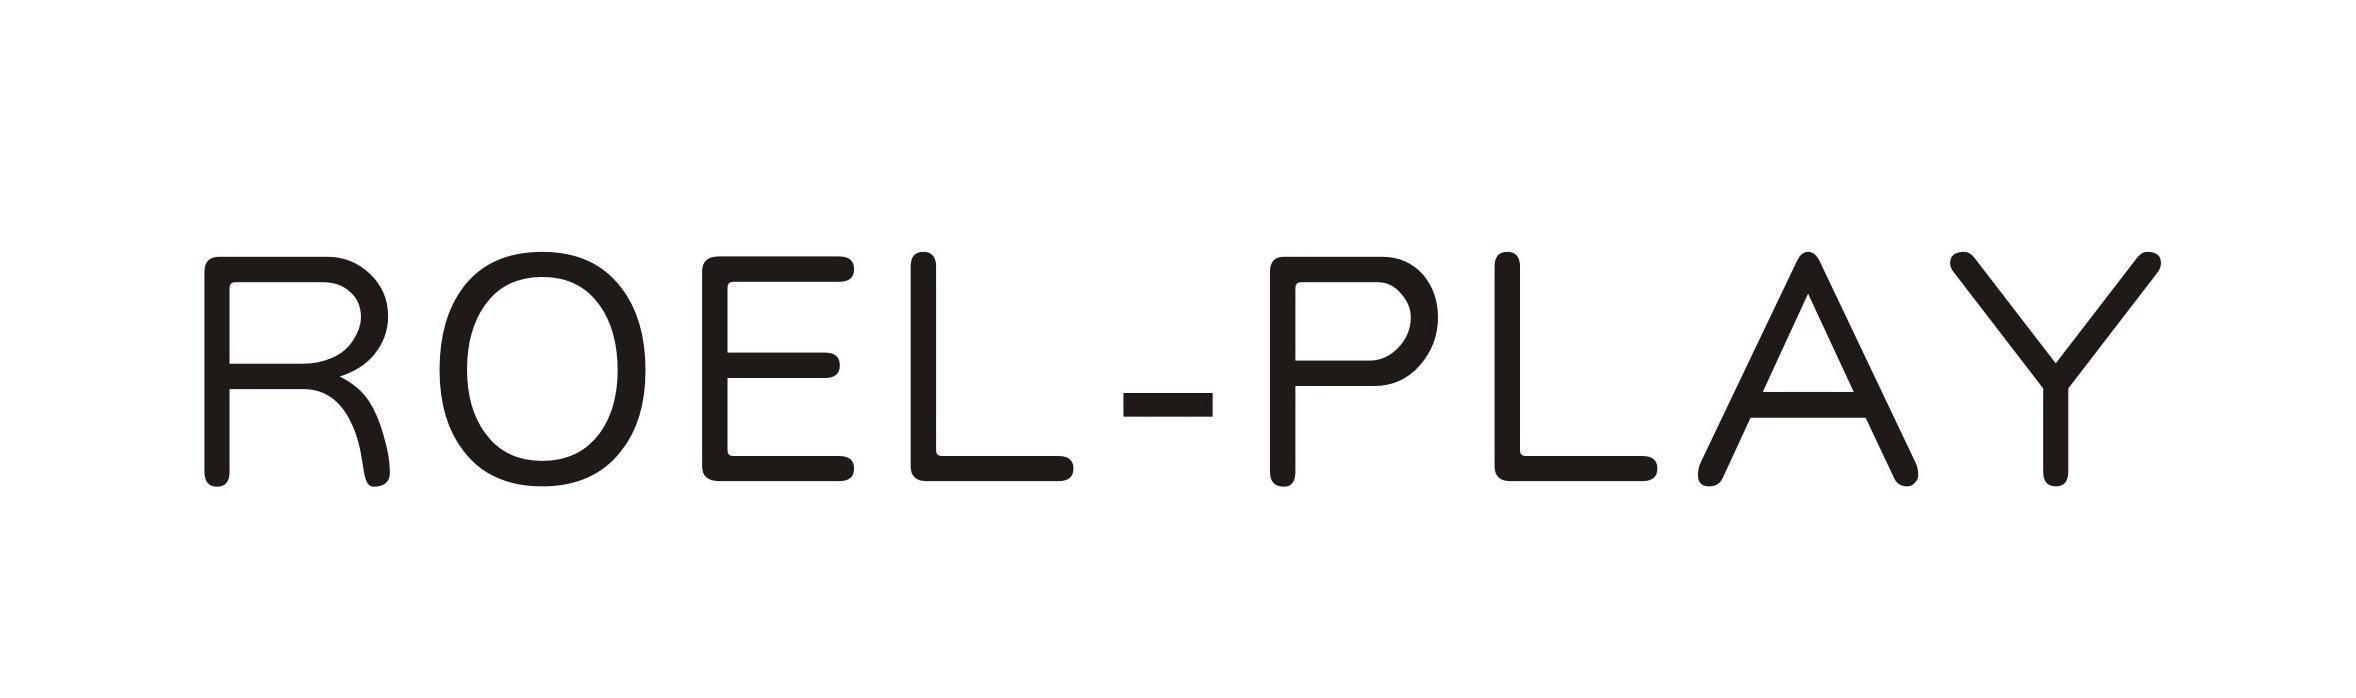 Trademark Logo ROEL-PLAY